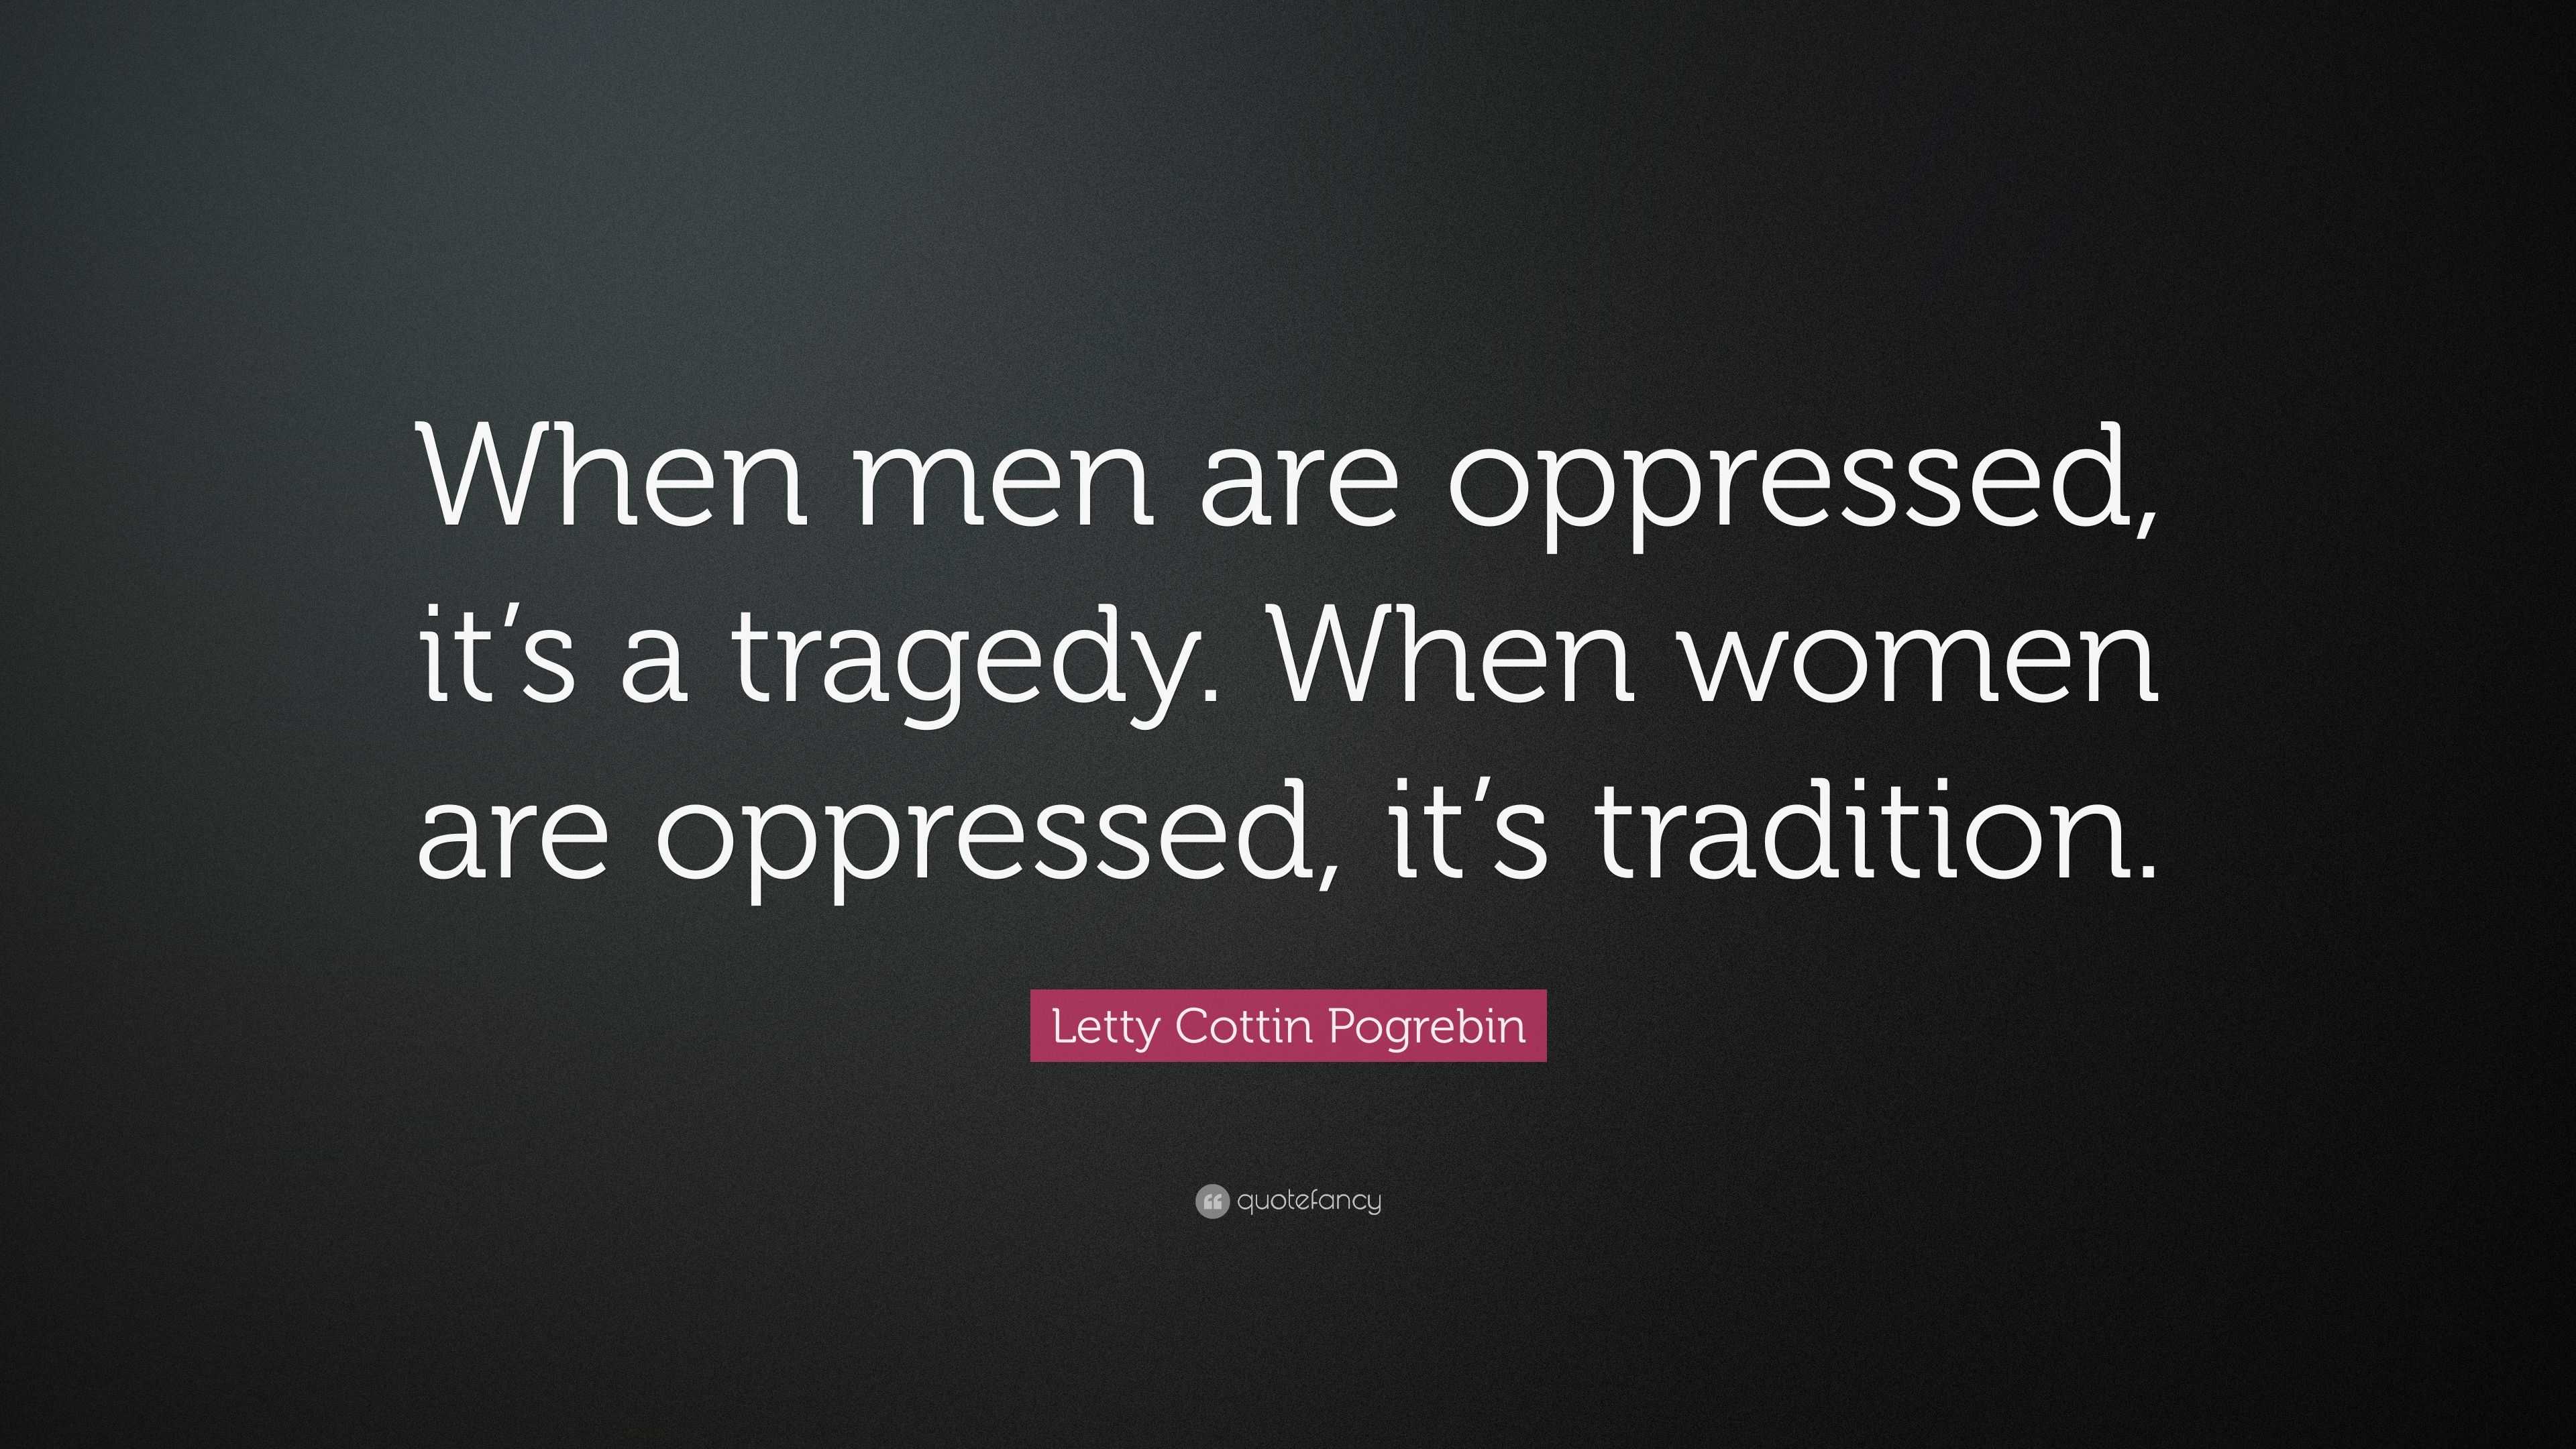 Letty Cottin Pogrebin Quote “when Men Are Oppressed It’s A Tragedy When Women Are Oppressed